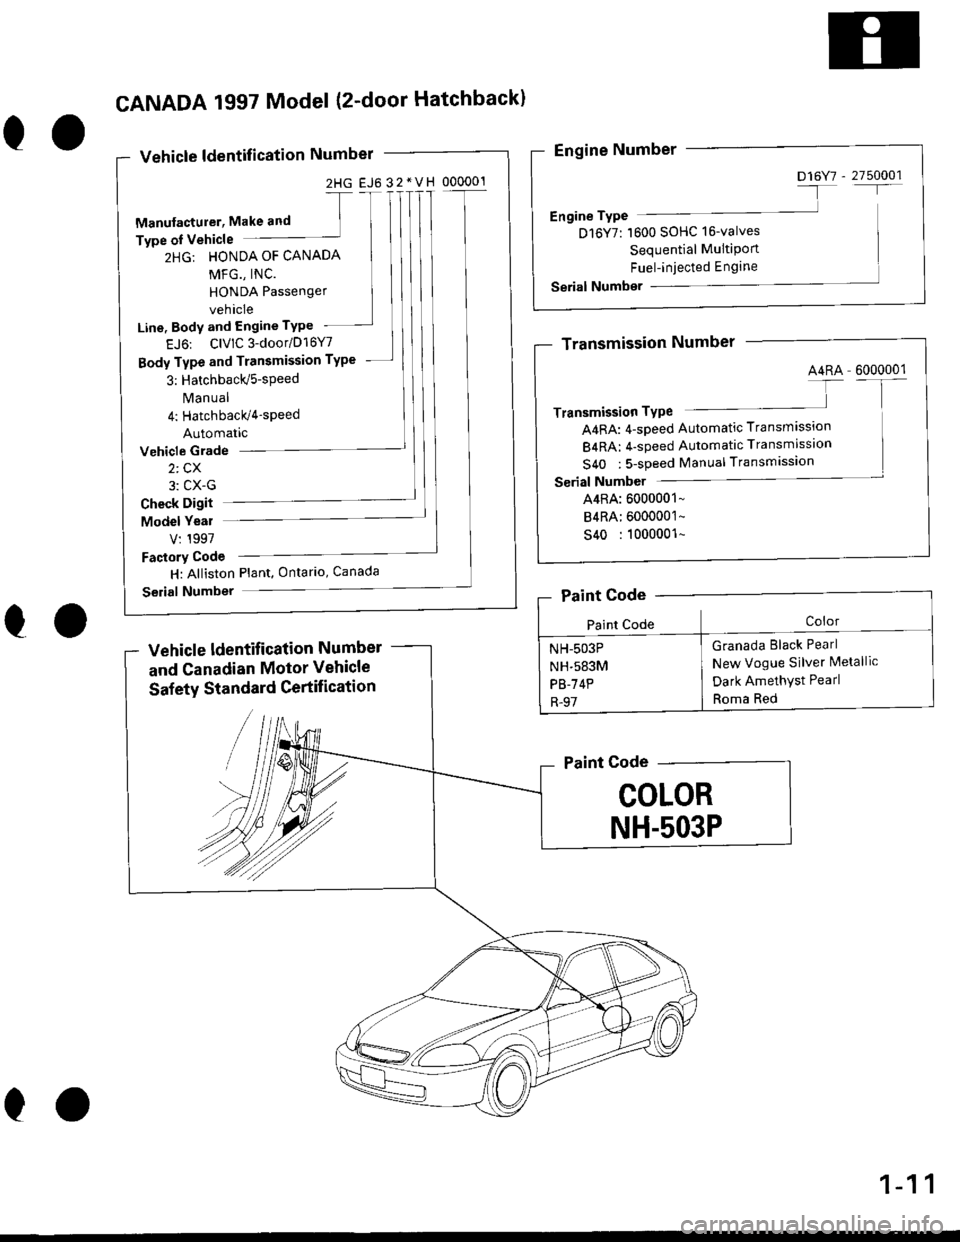 HONDA CIVIC 1997 6.G User Guide 2HG EJ6 32*VH 000001
eo
CANADA 1997 Model (2-door Hatchbackl
Vehicle ldentification Number
-[
Manufacturer, Make and ]Type oI Vehicle
2HG: HONDA OF CANADA
MFG., INC.
HONDA Passenger
vehicle
Line, Body